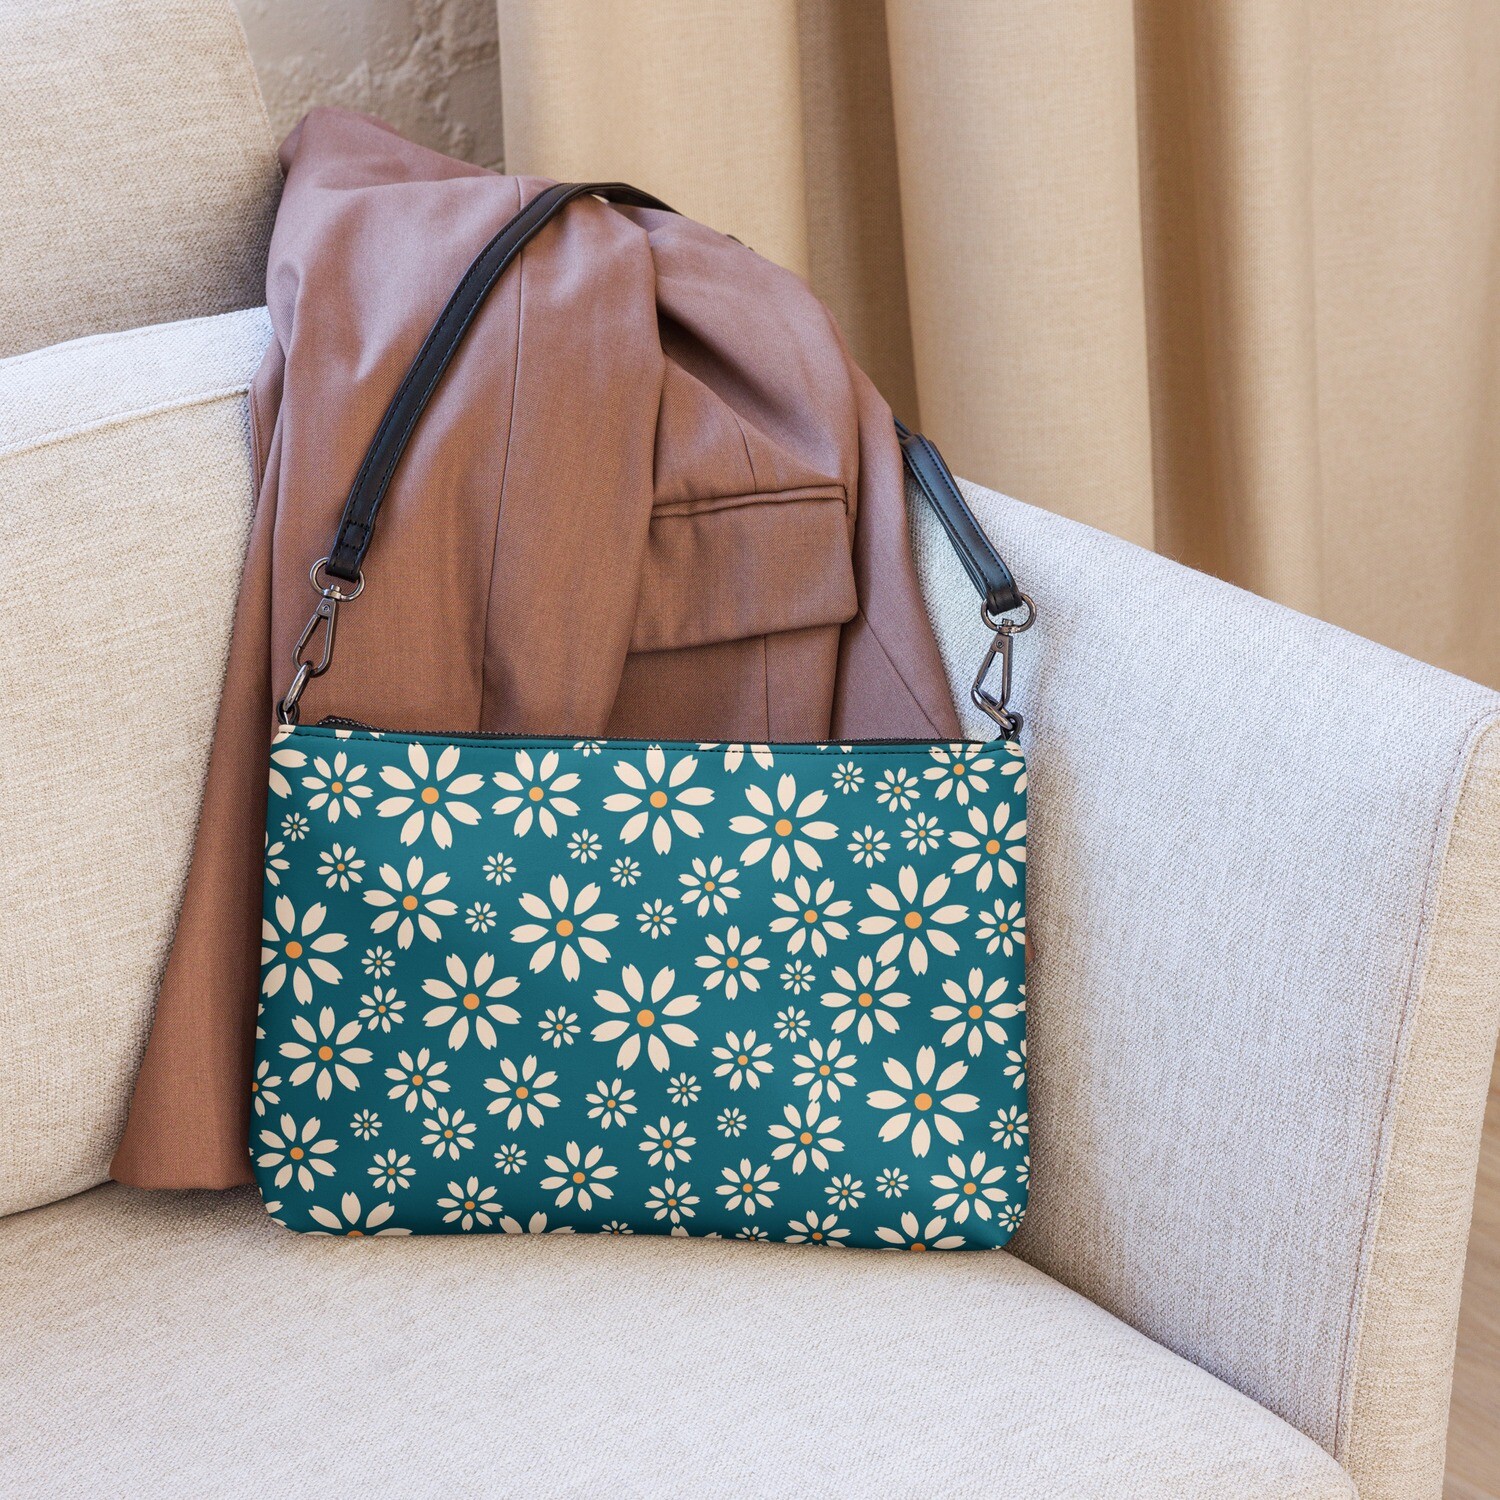 Retro turquoise crossbody bag with daisy pattern